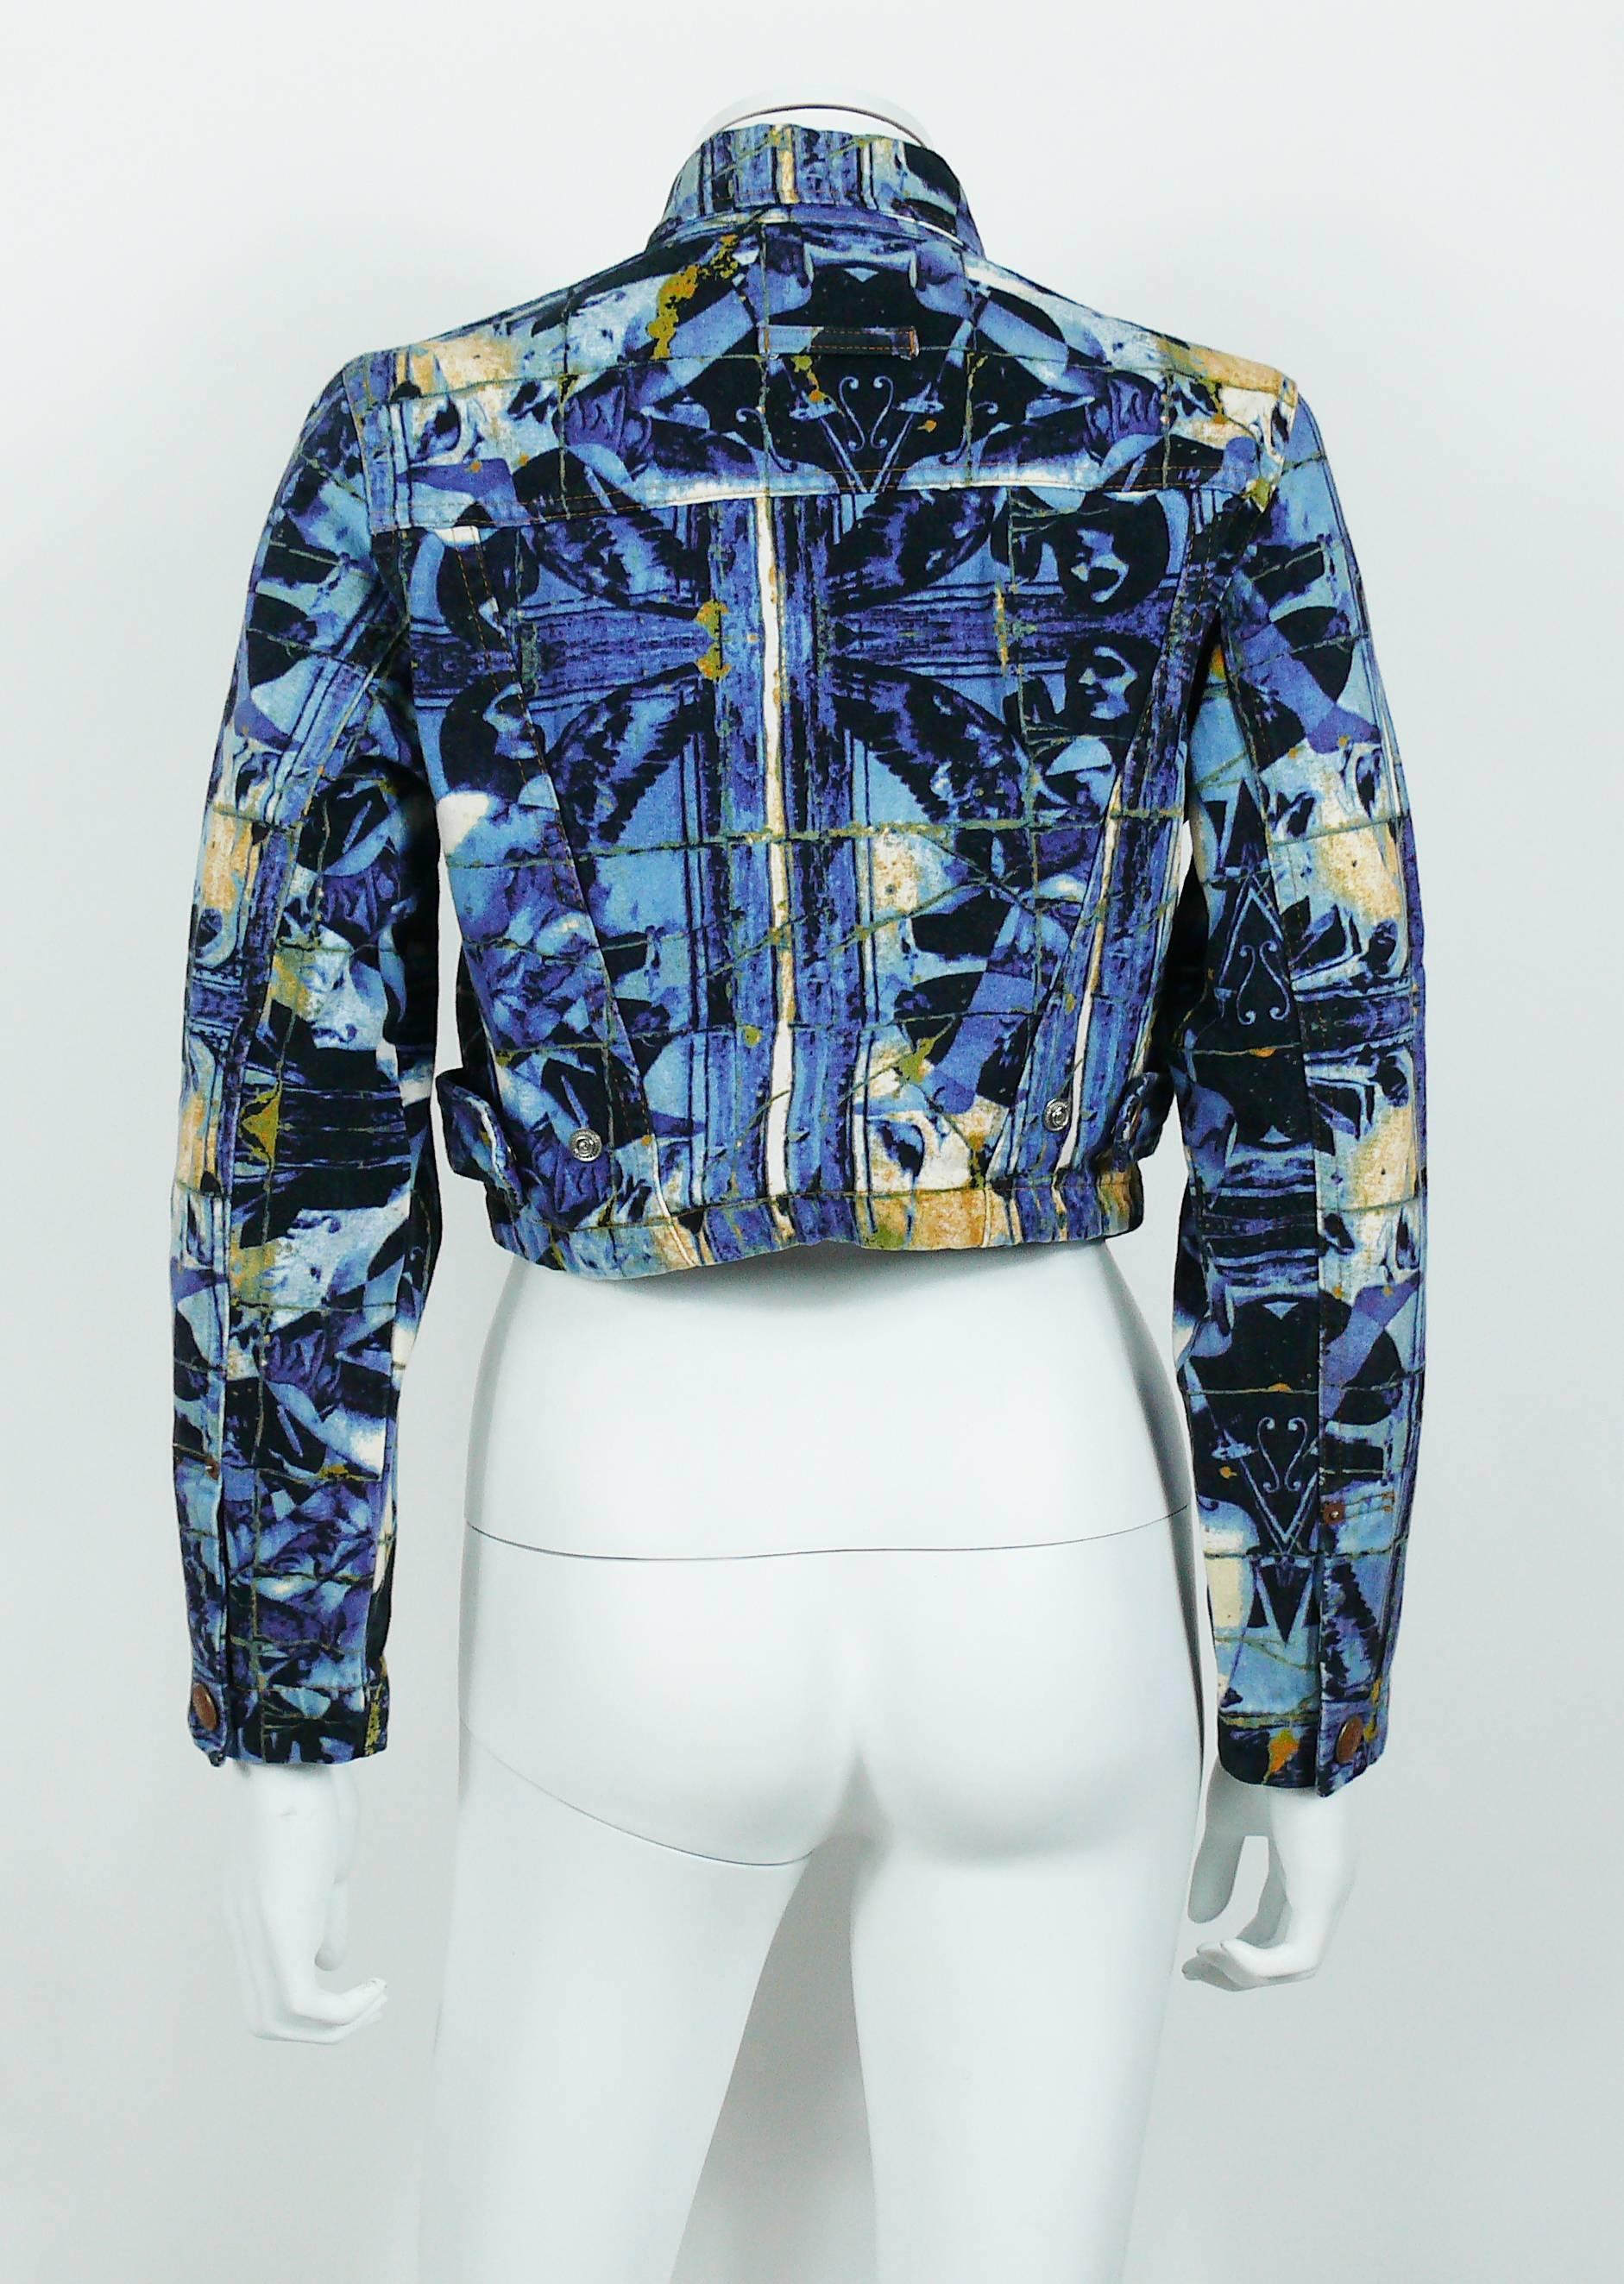 Women's Jean Paul Gaultier Vintage Mosaic Print Cropped Jacket